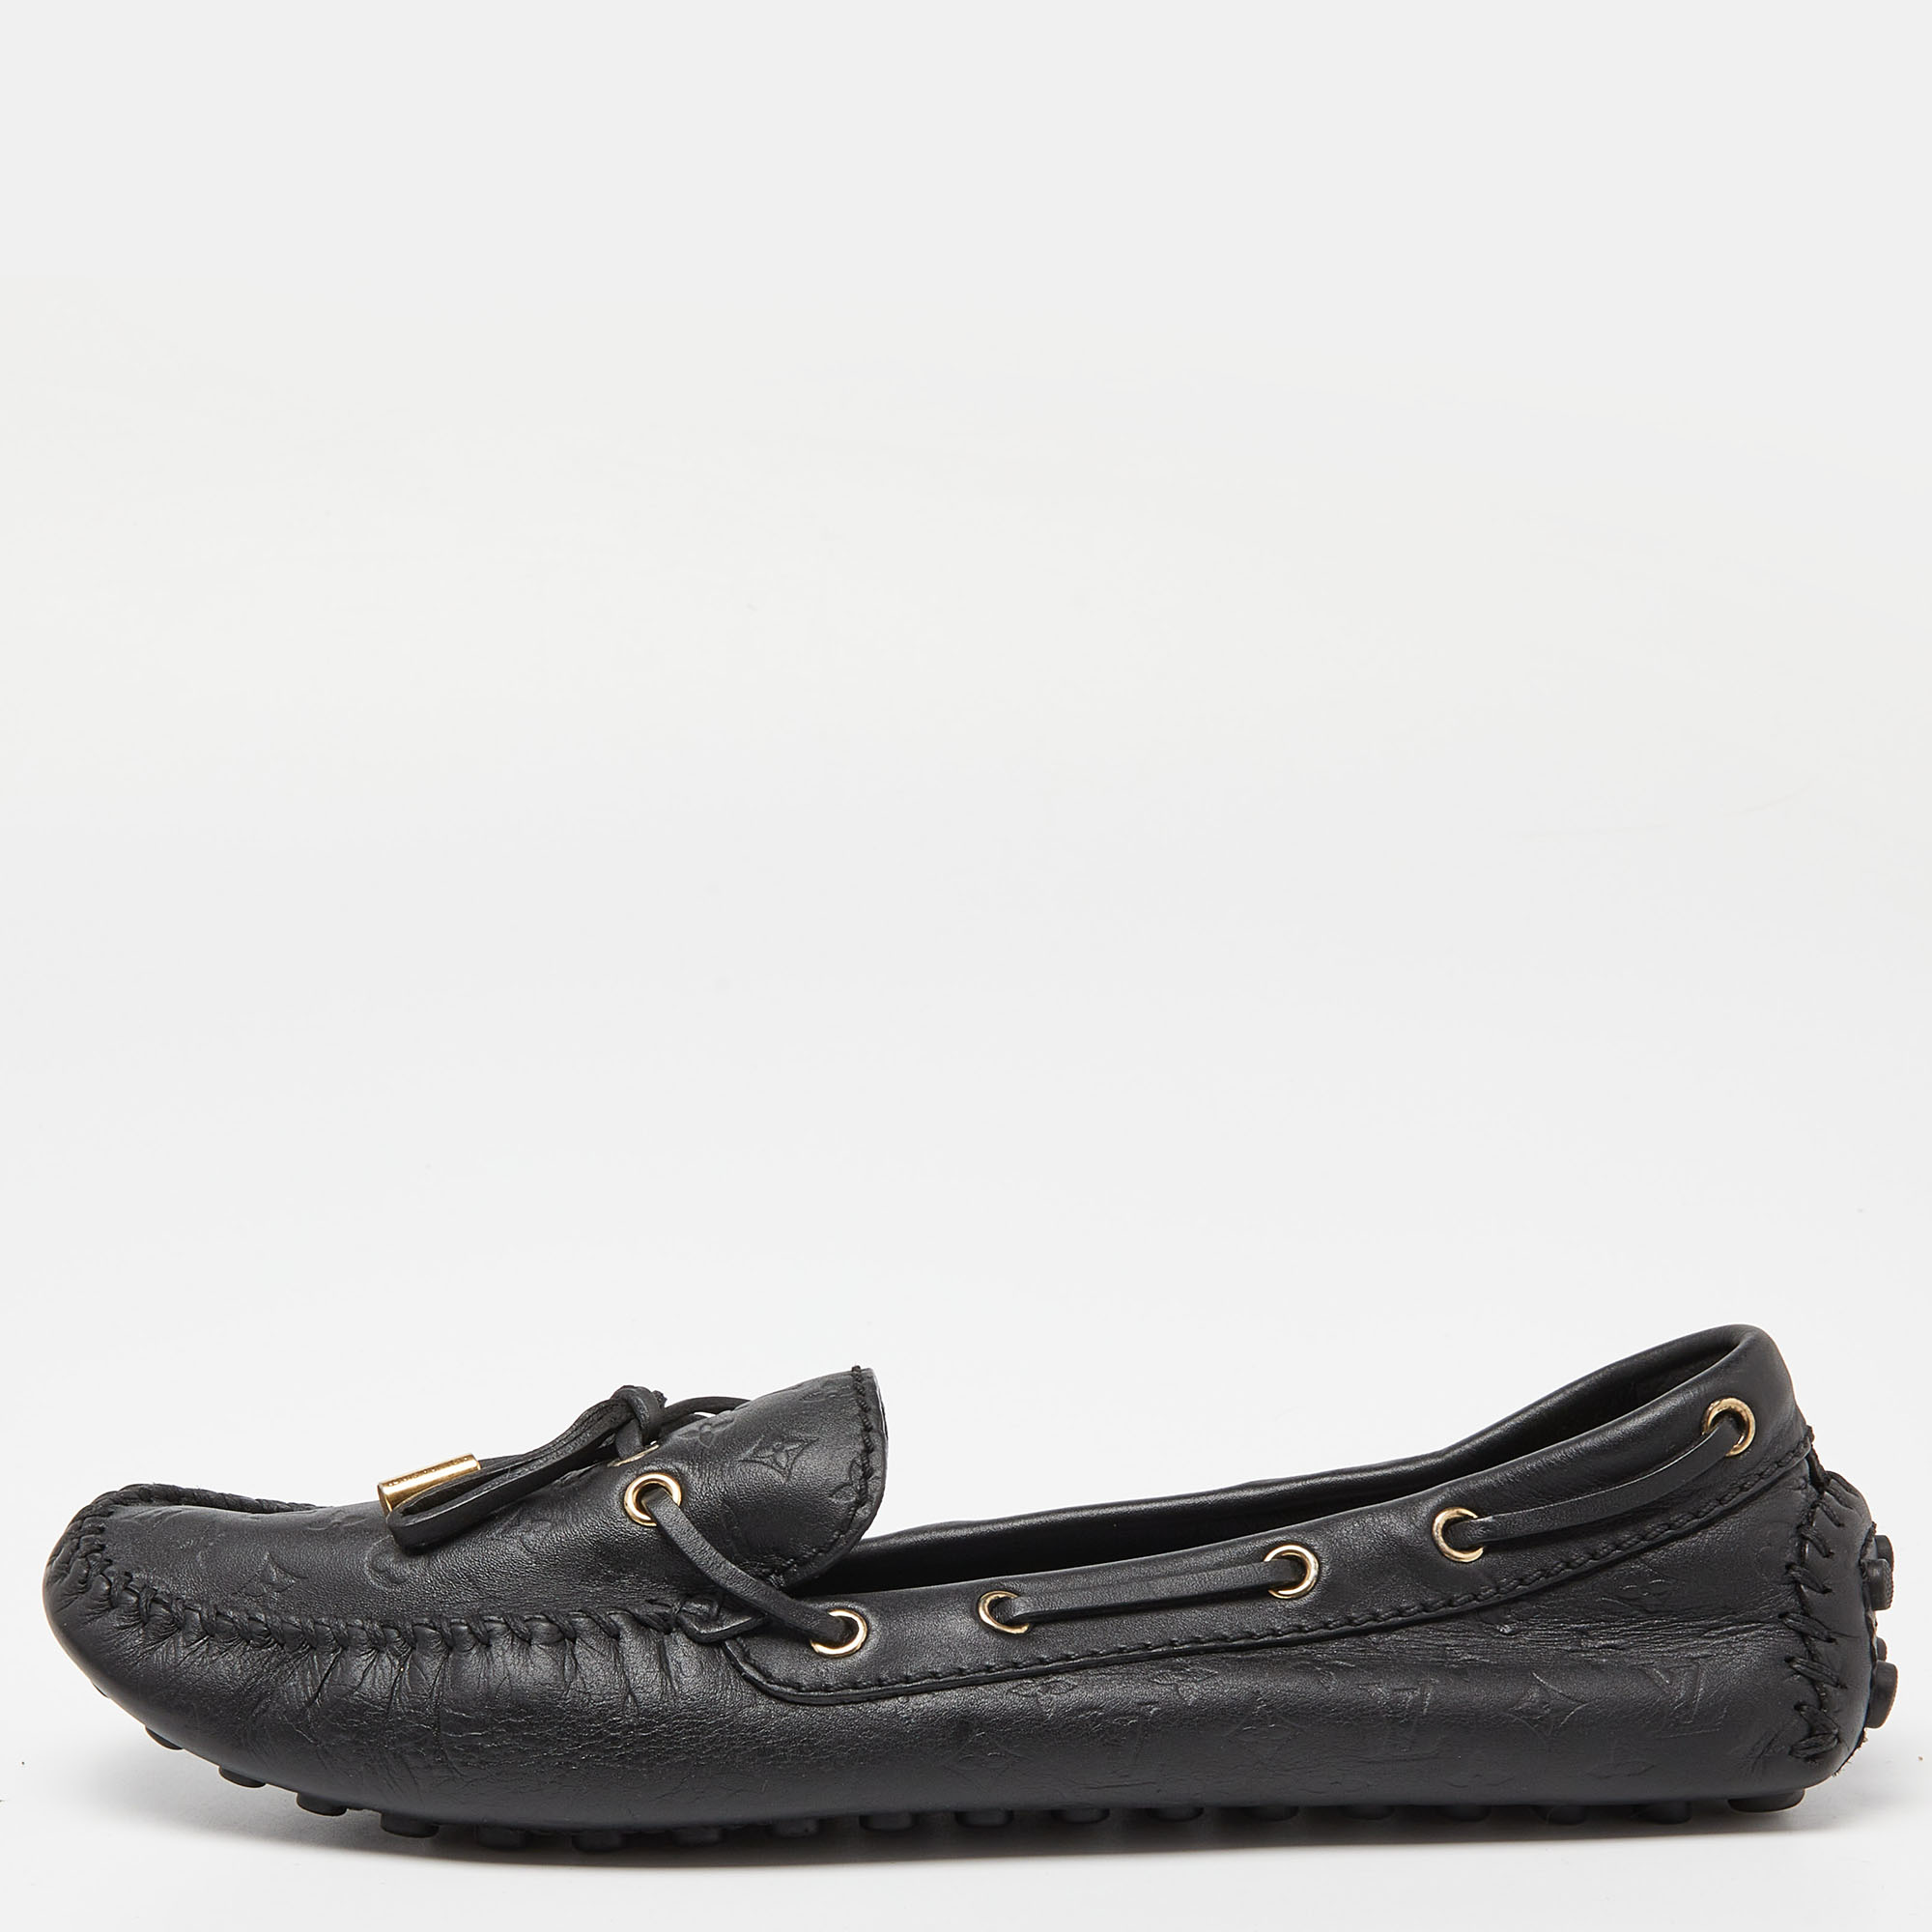 Louis Vuitton, Shoes, Authentic Lv Flat Loafer